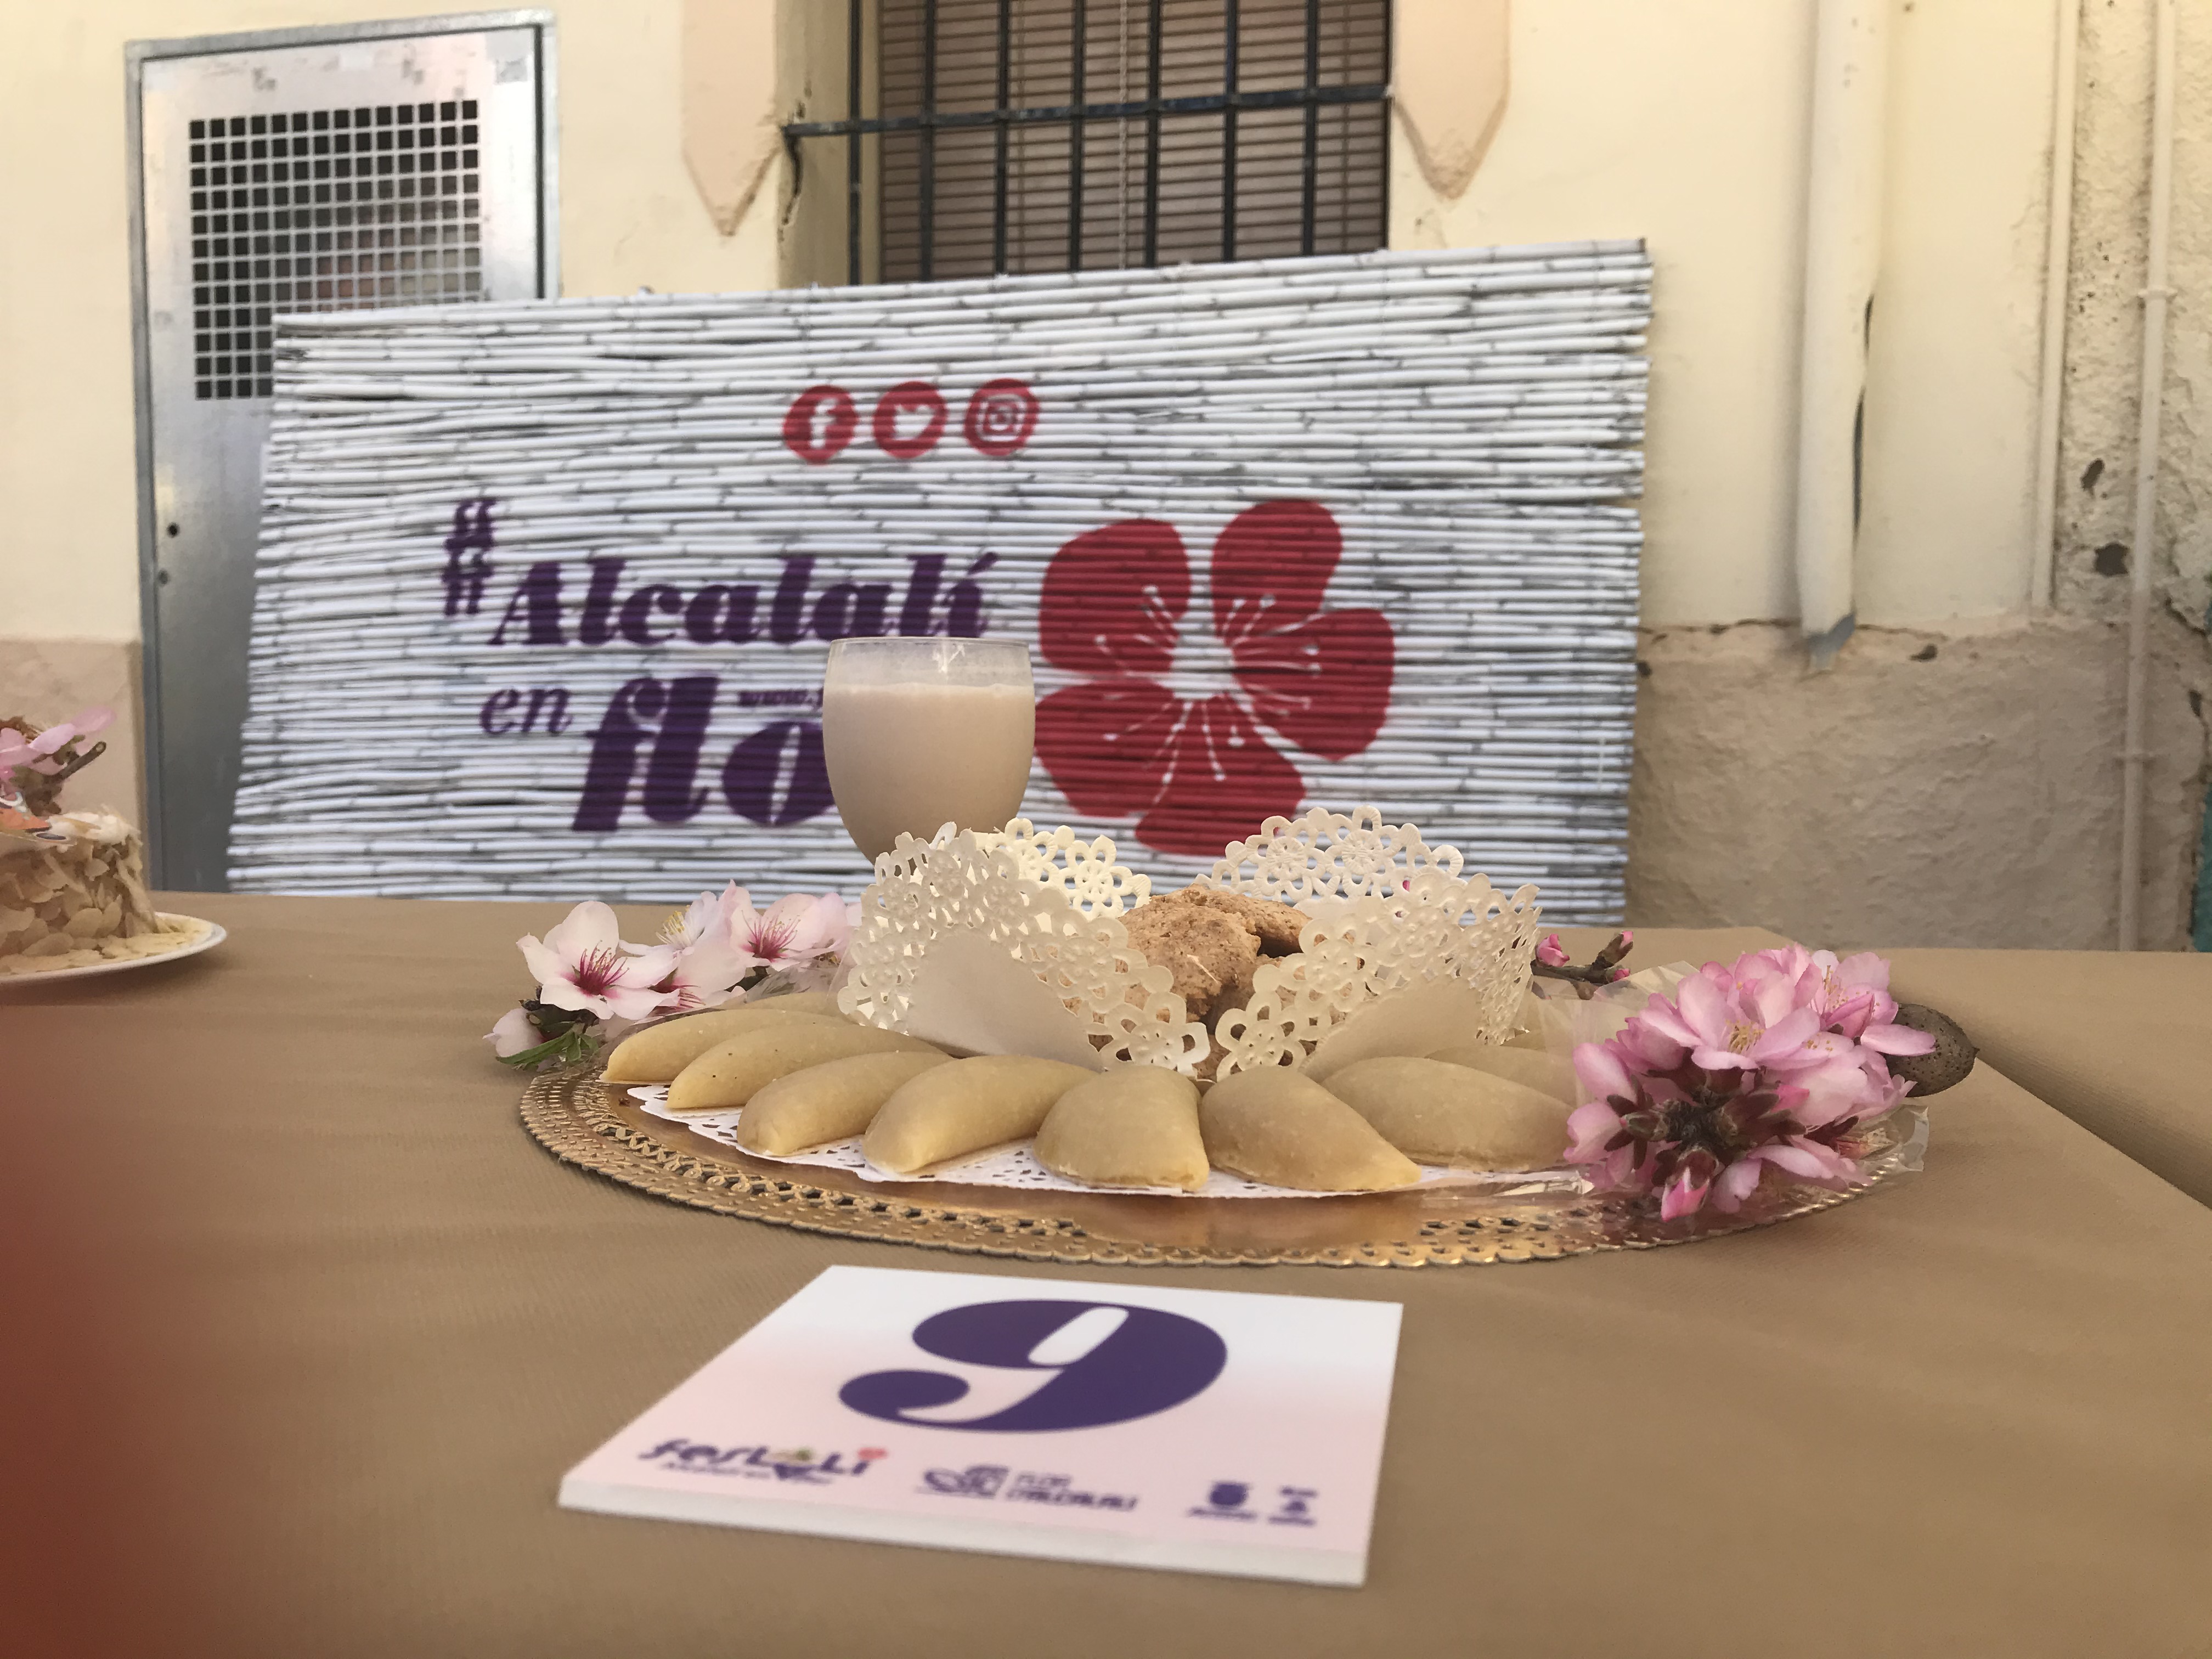 Concurso de pasteles con almendra de Alcalalí